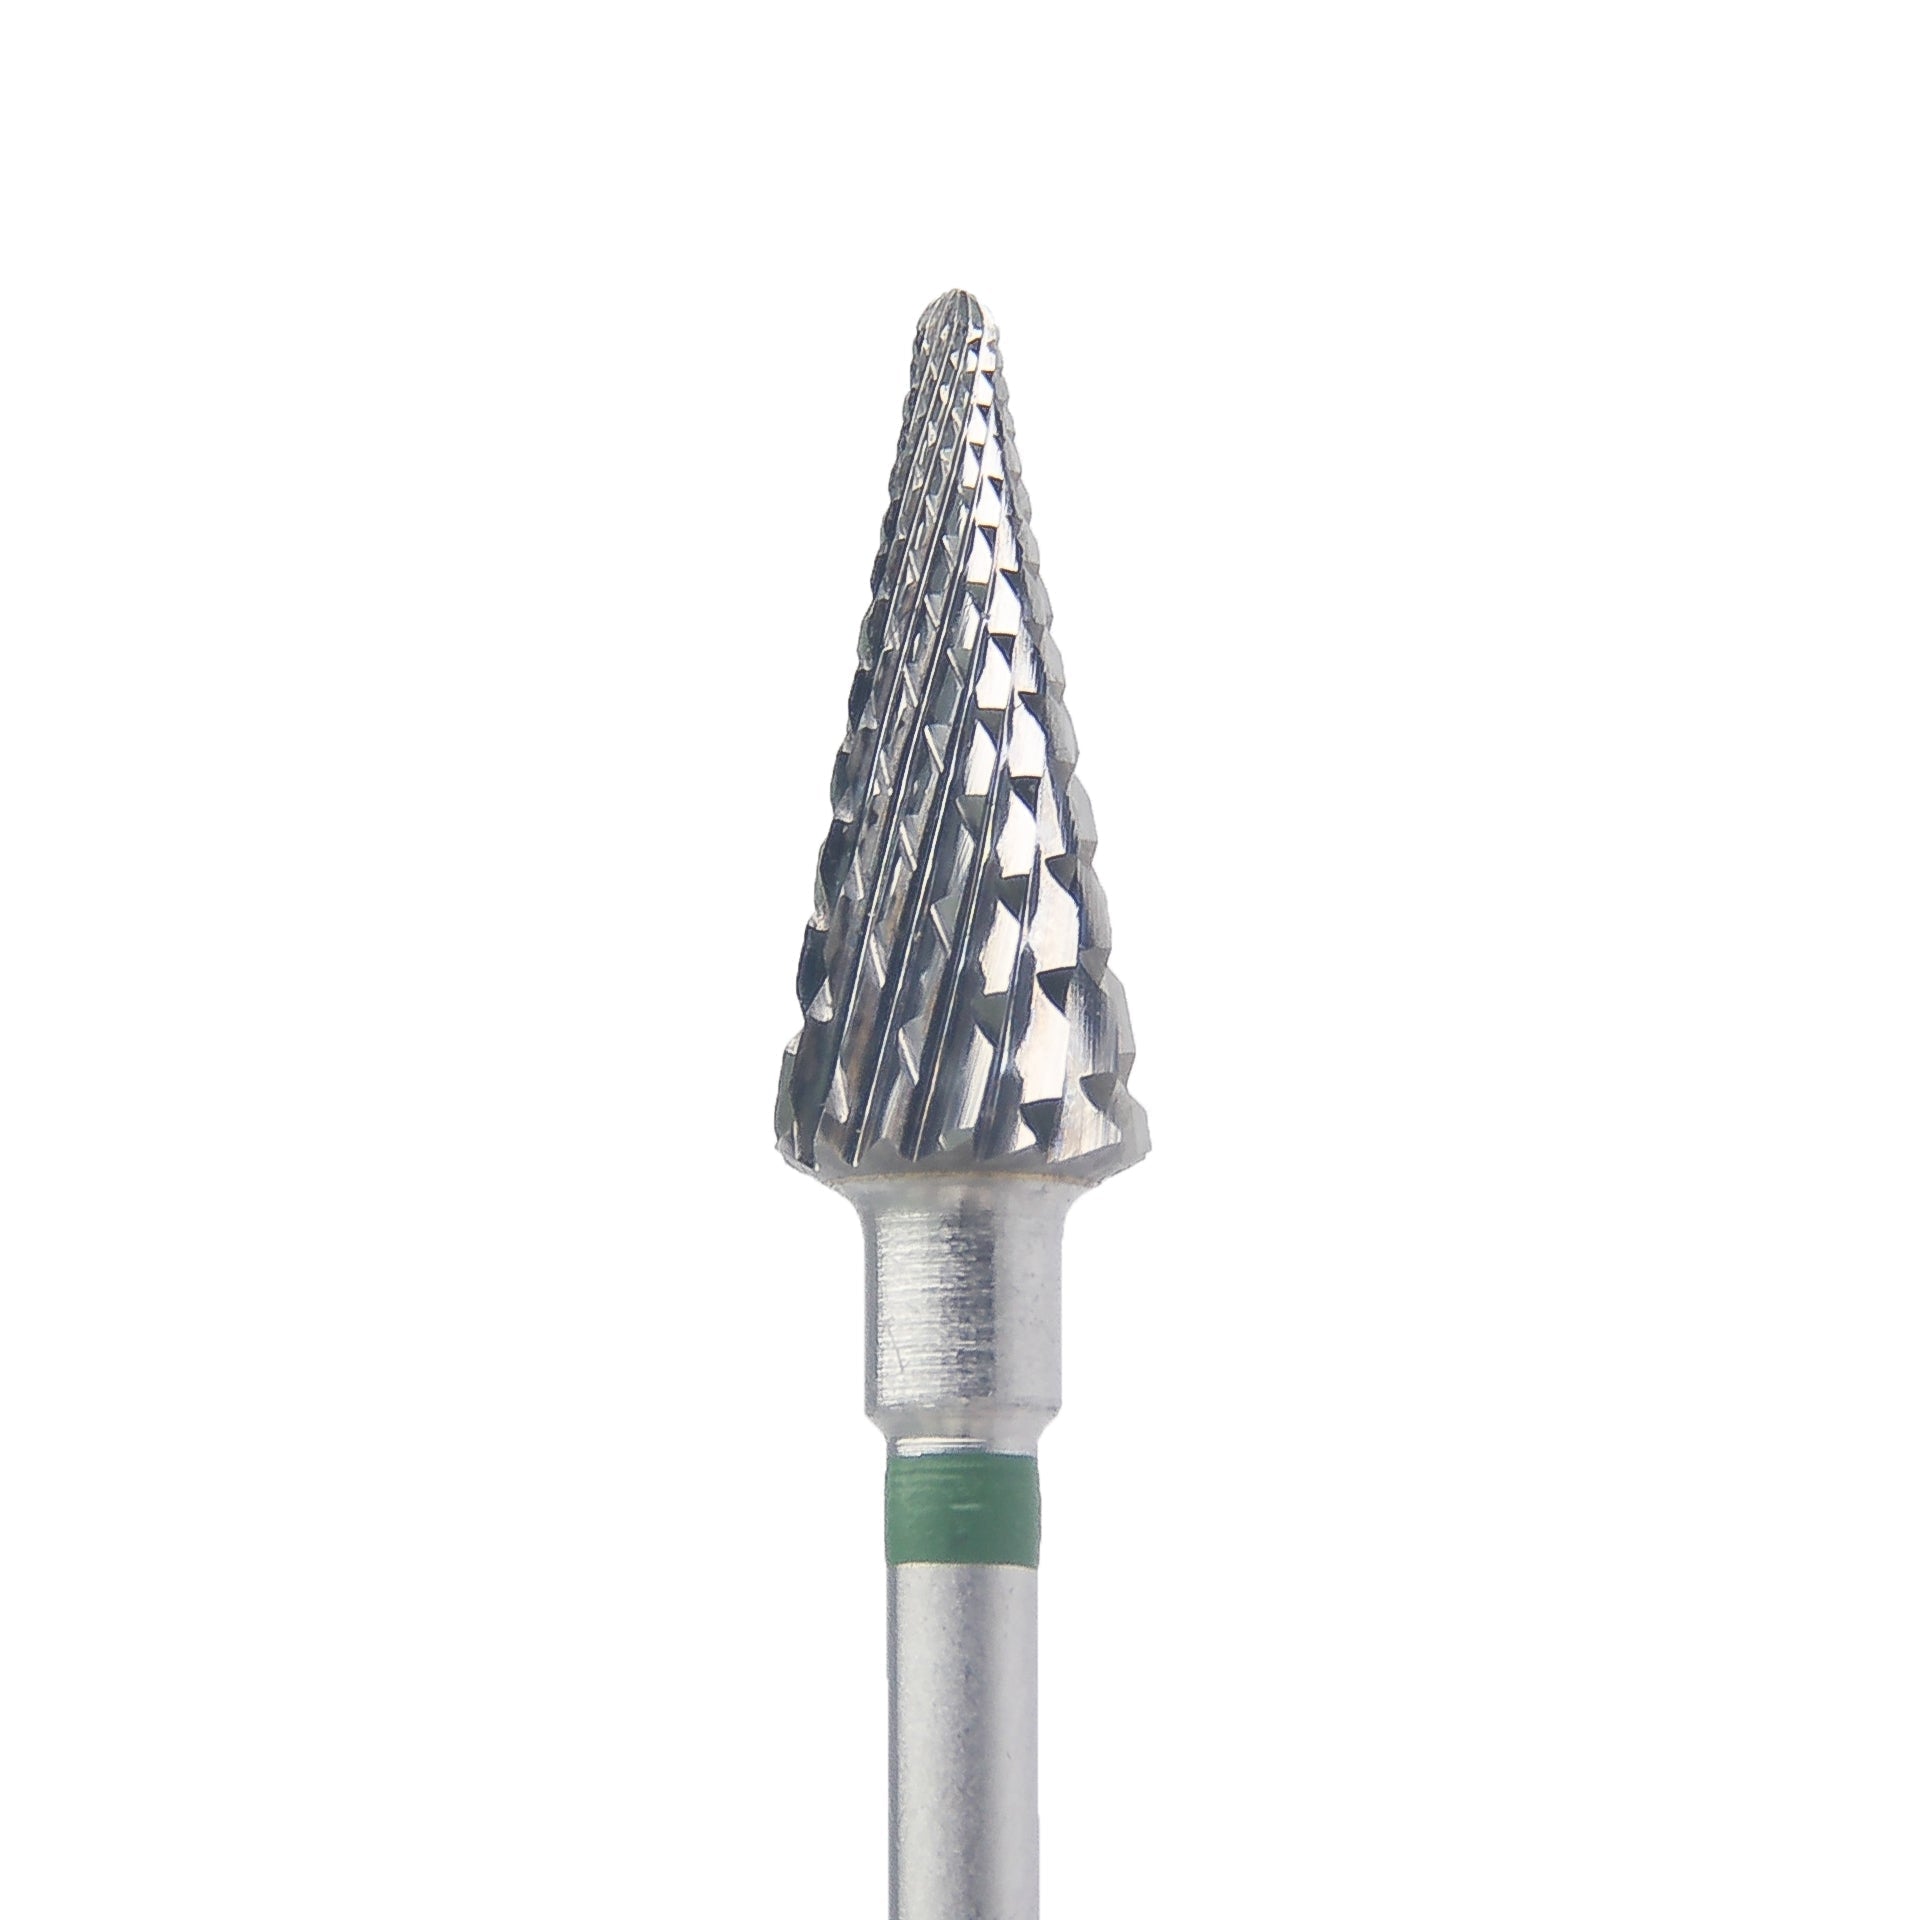 KMIZ Tungsten Carbide Cone E-File Nail Bit, 6.0mm, Green